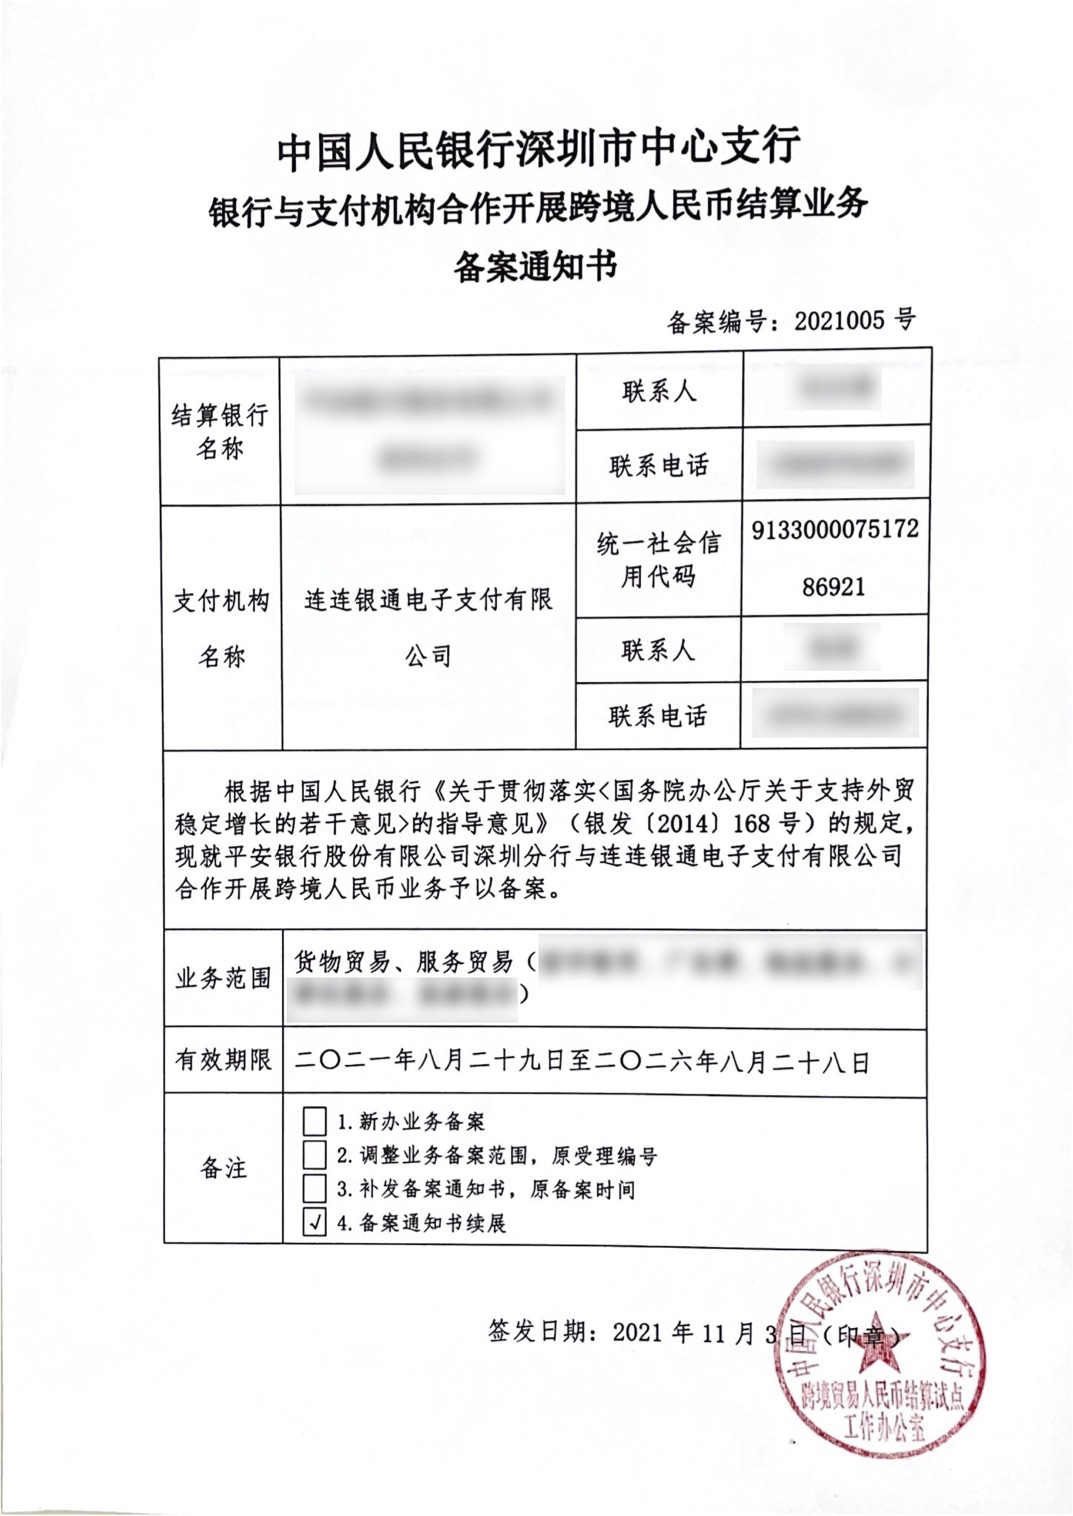 Cross-border RMB Settlement Business Filing (Shenzhen)